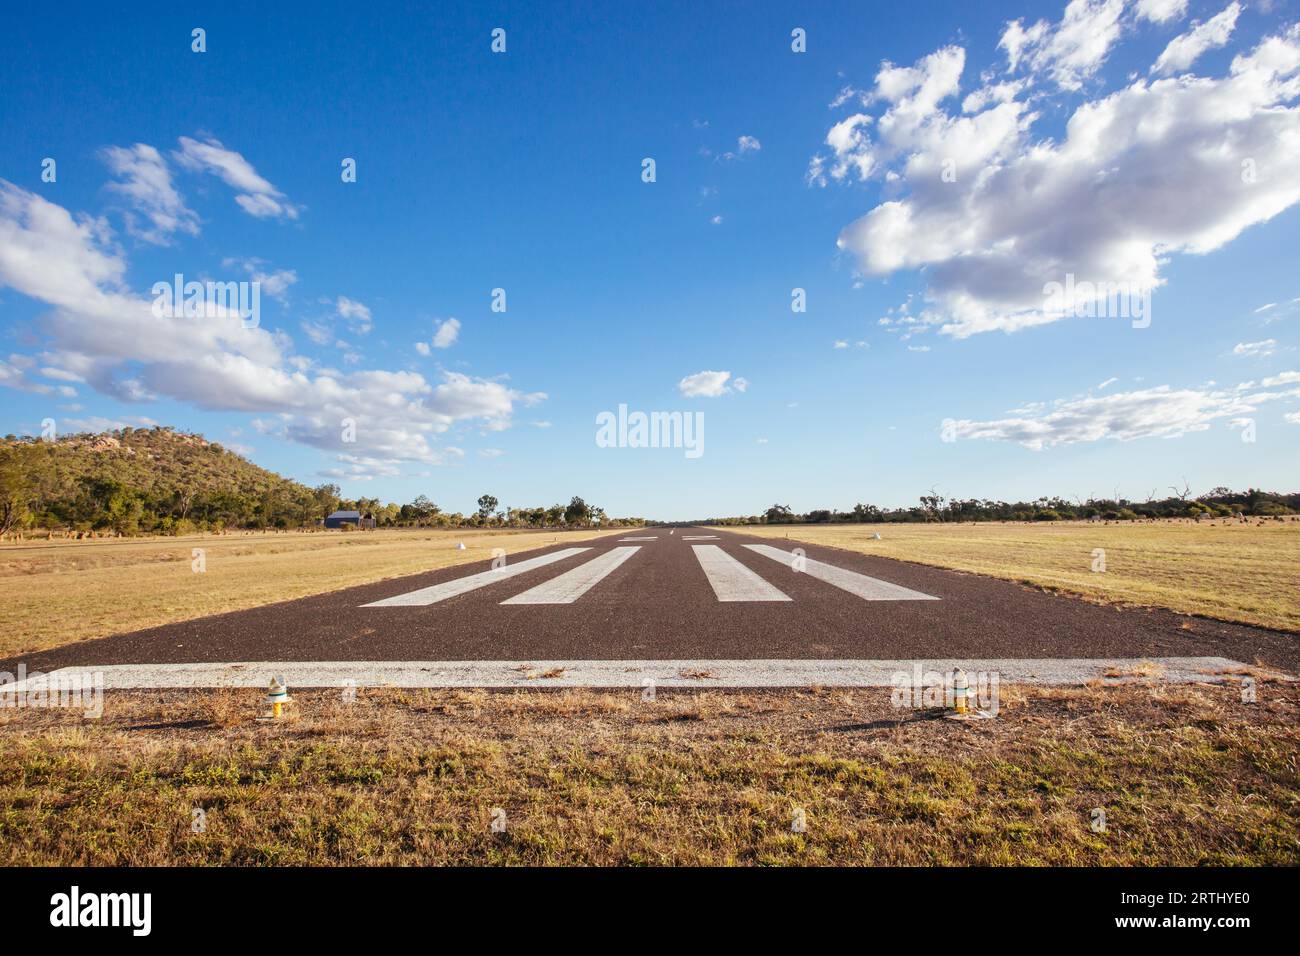 The rural Mount Surprise Airport and runway in Queensland, Australia Stock Photo